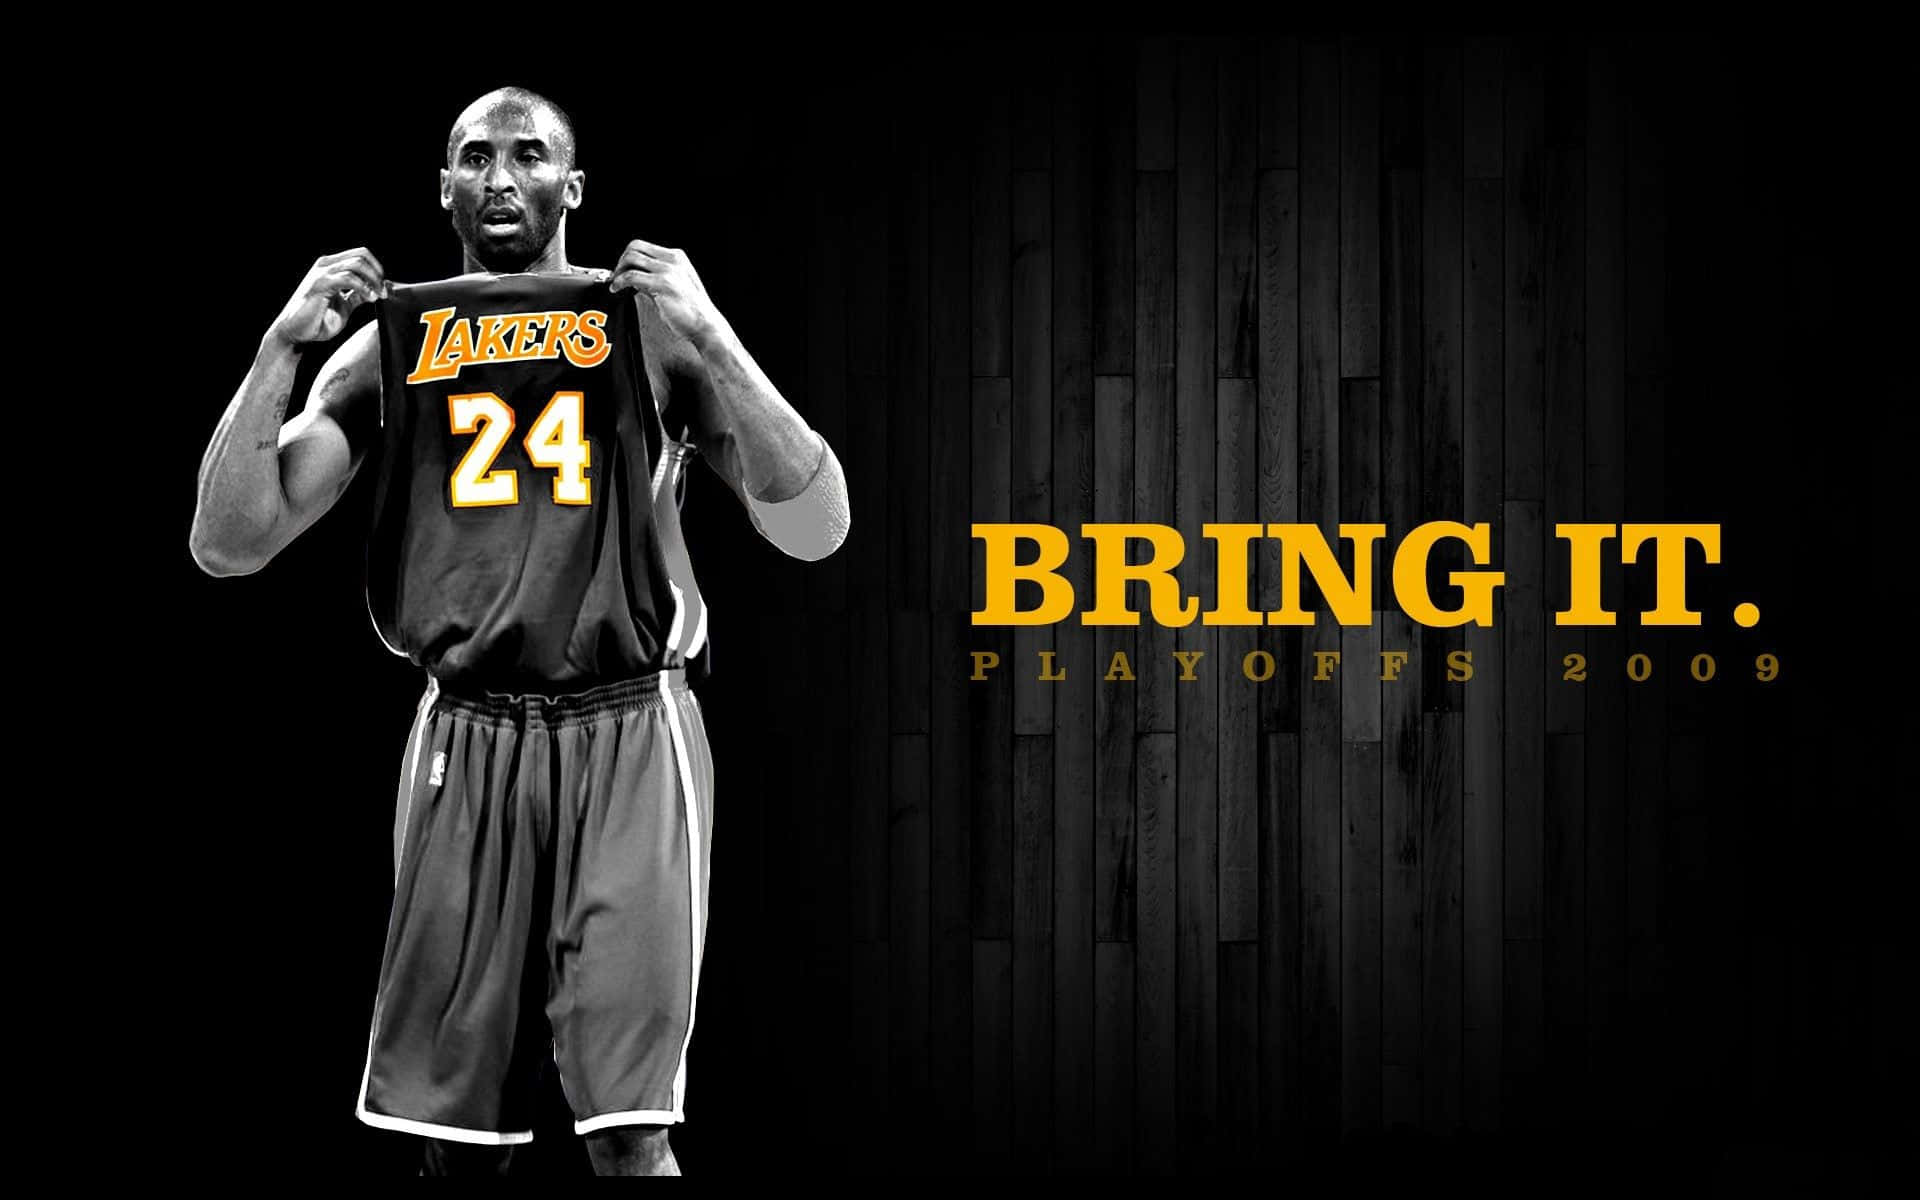 Kobe Bryant Playoffs 2009 Basketball Poster Background